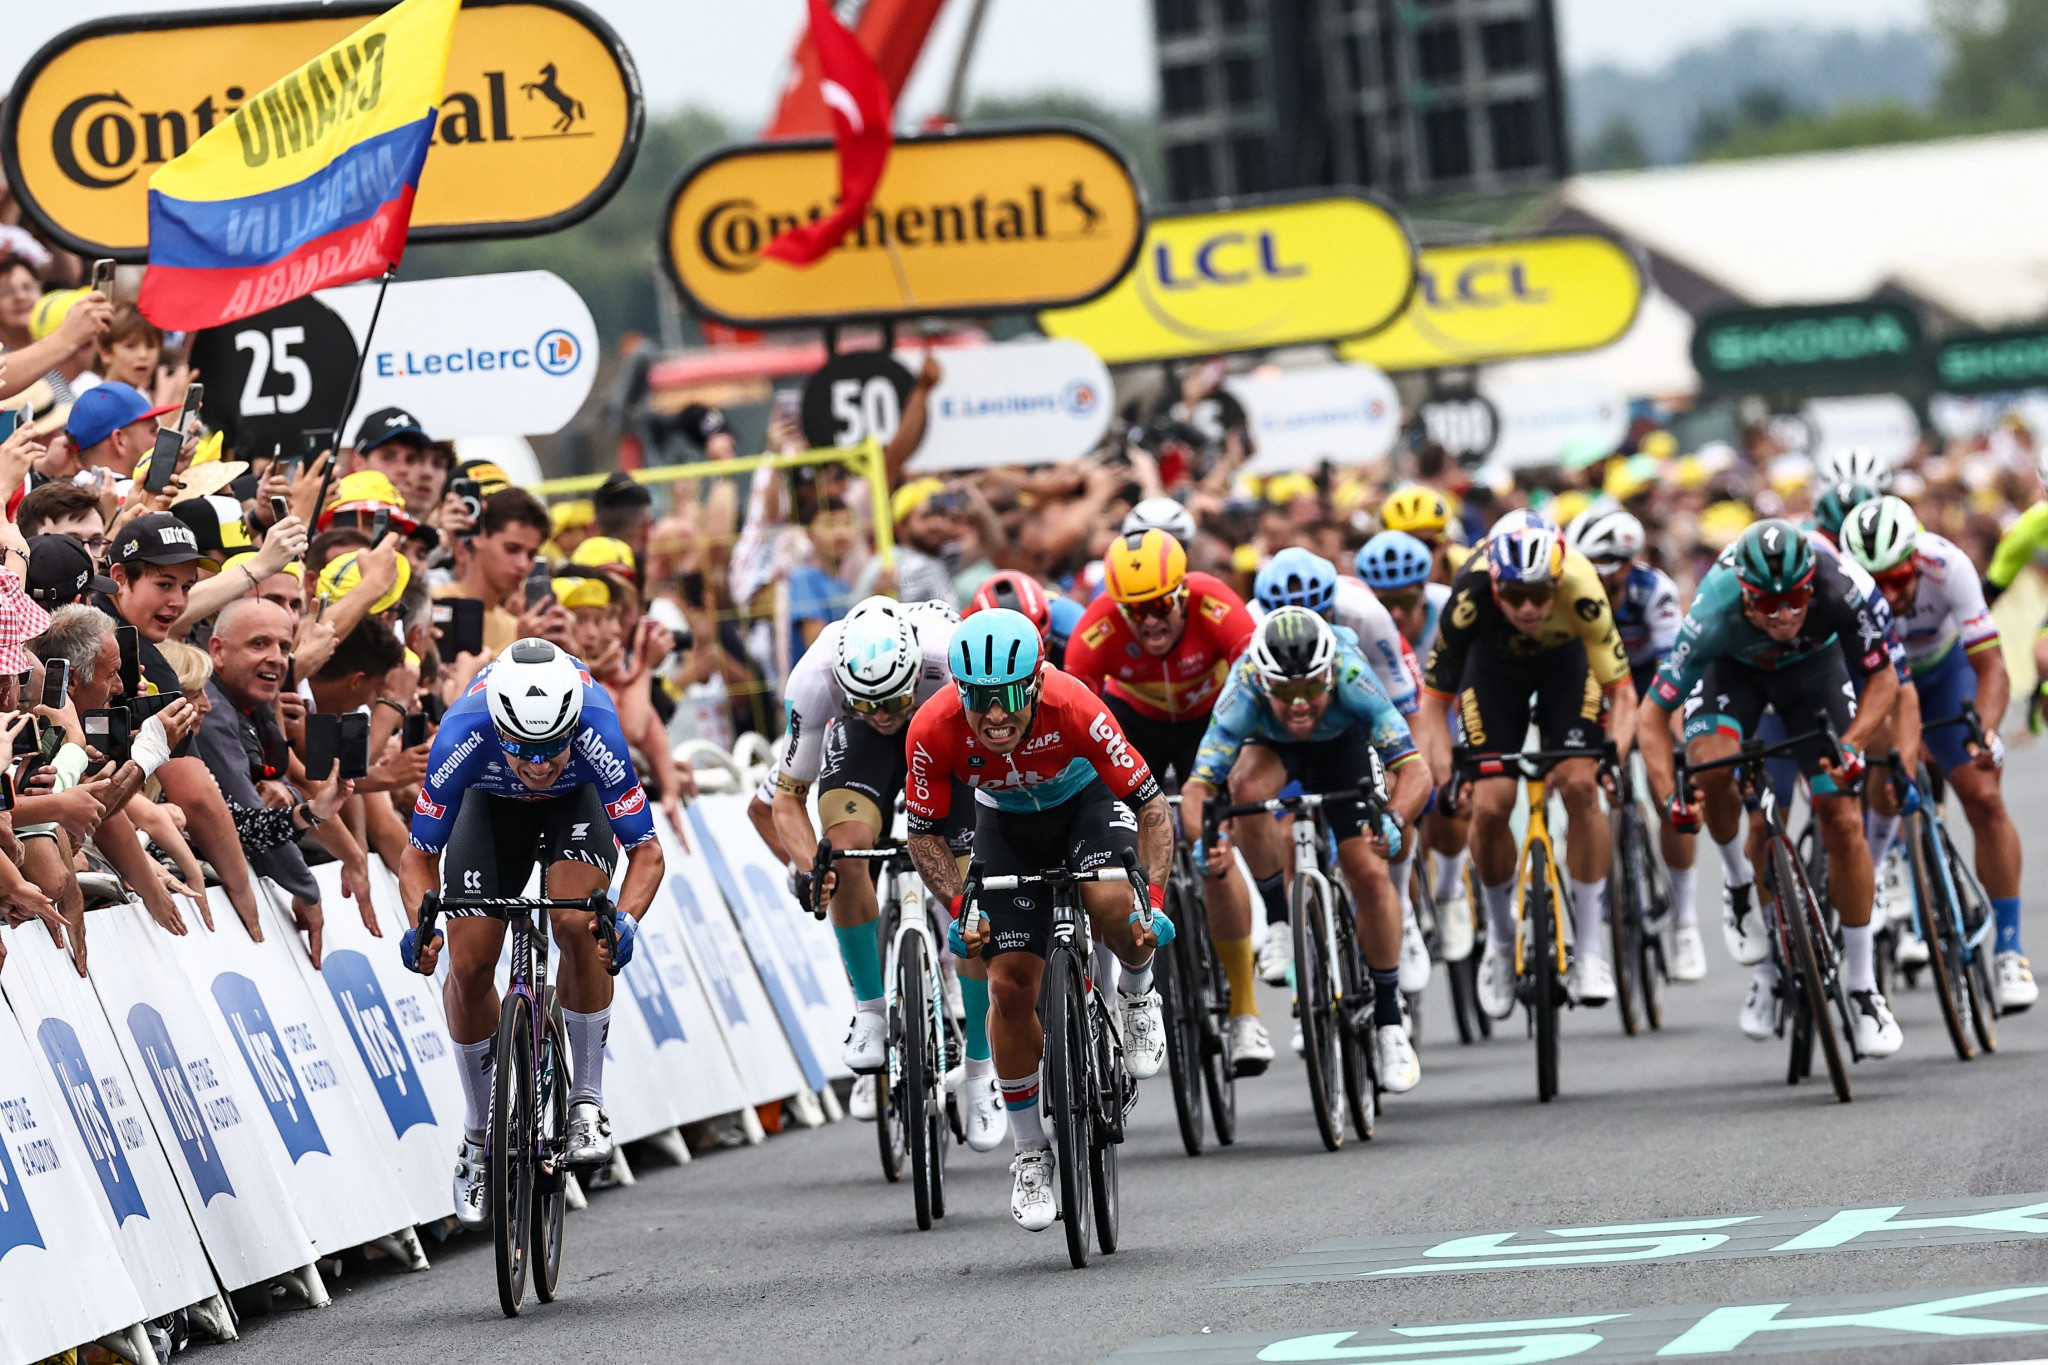 Philipsen avoids crash-filled finish for second straight Tour de France stage win